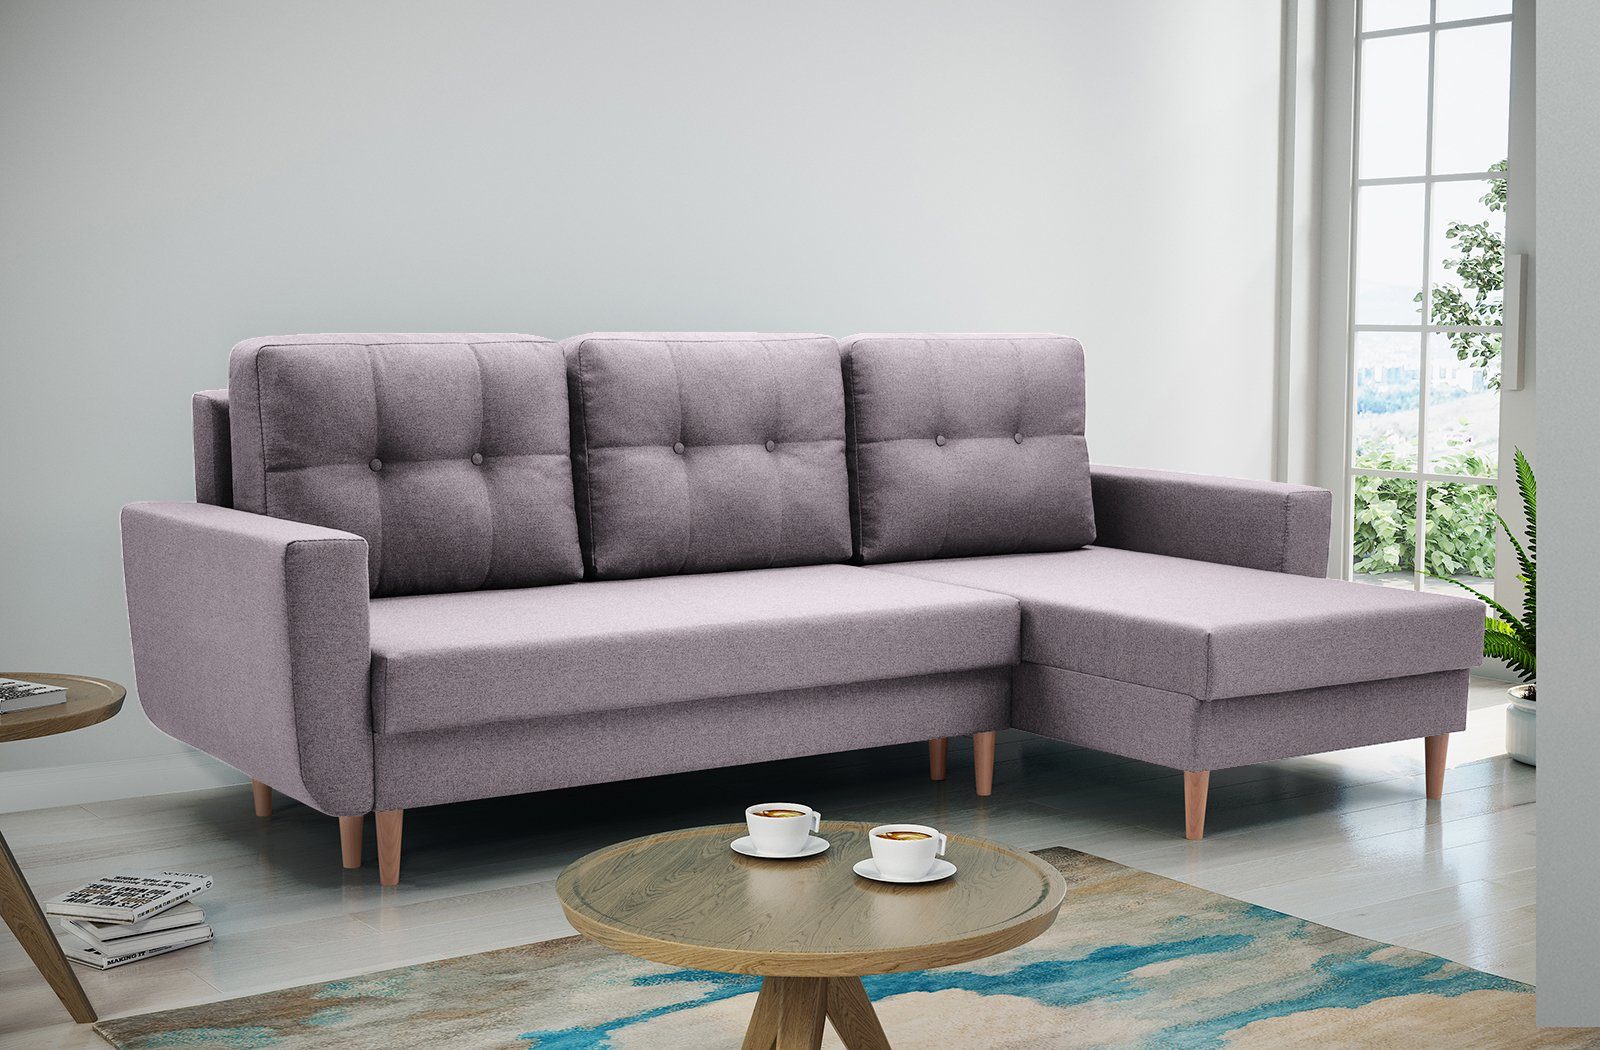 Beautysofa Polsterecke Couch Sofa (malmo Ecksofa Schlaffunktion, ONLY, mit 90) new universelle Hellgrau mit mane